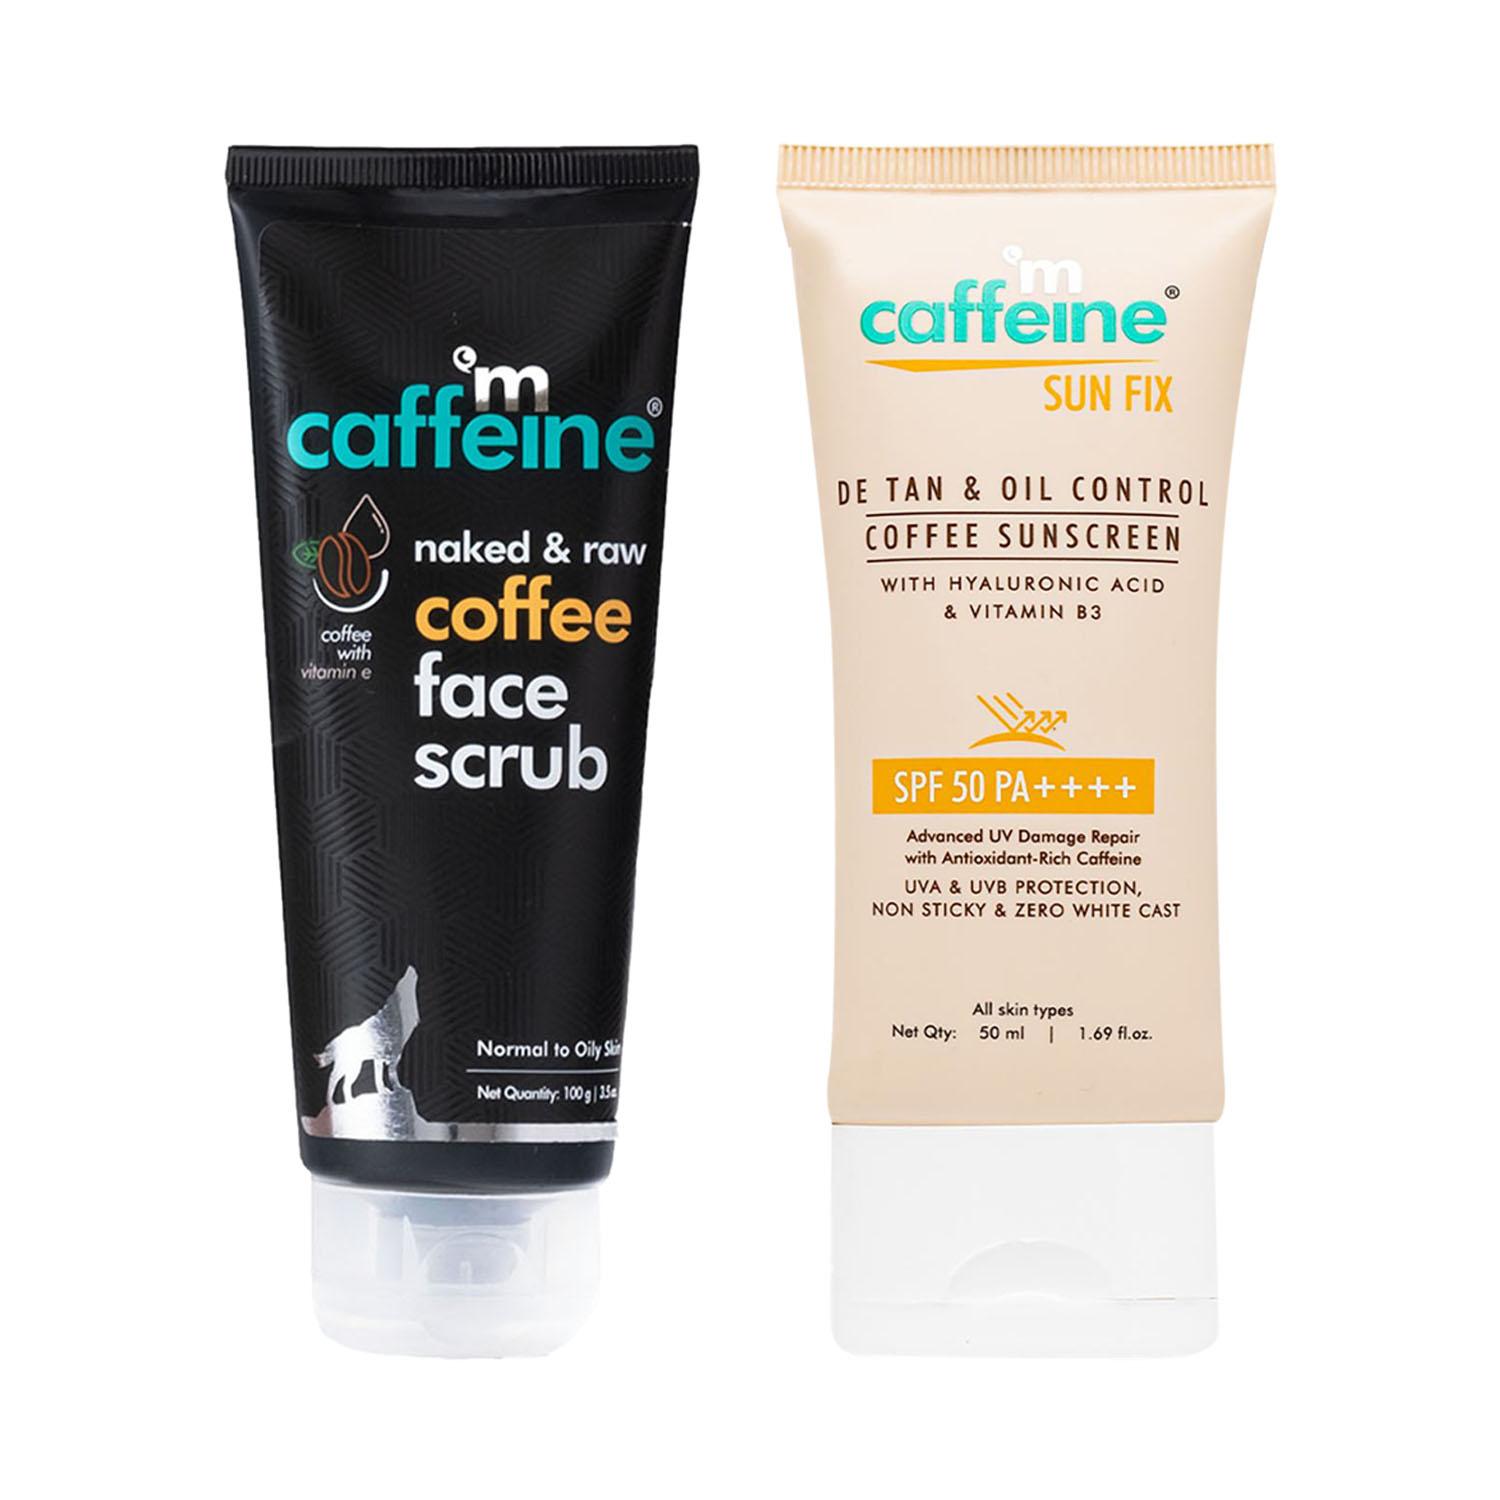 mCaffeine | mCaffeine Cleanse Sun protect Combo - Naked & Raw Coffee Face Scrub & Detan & Coffee Sunscreen